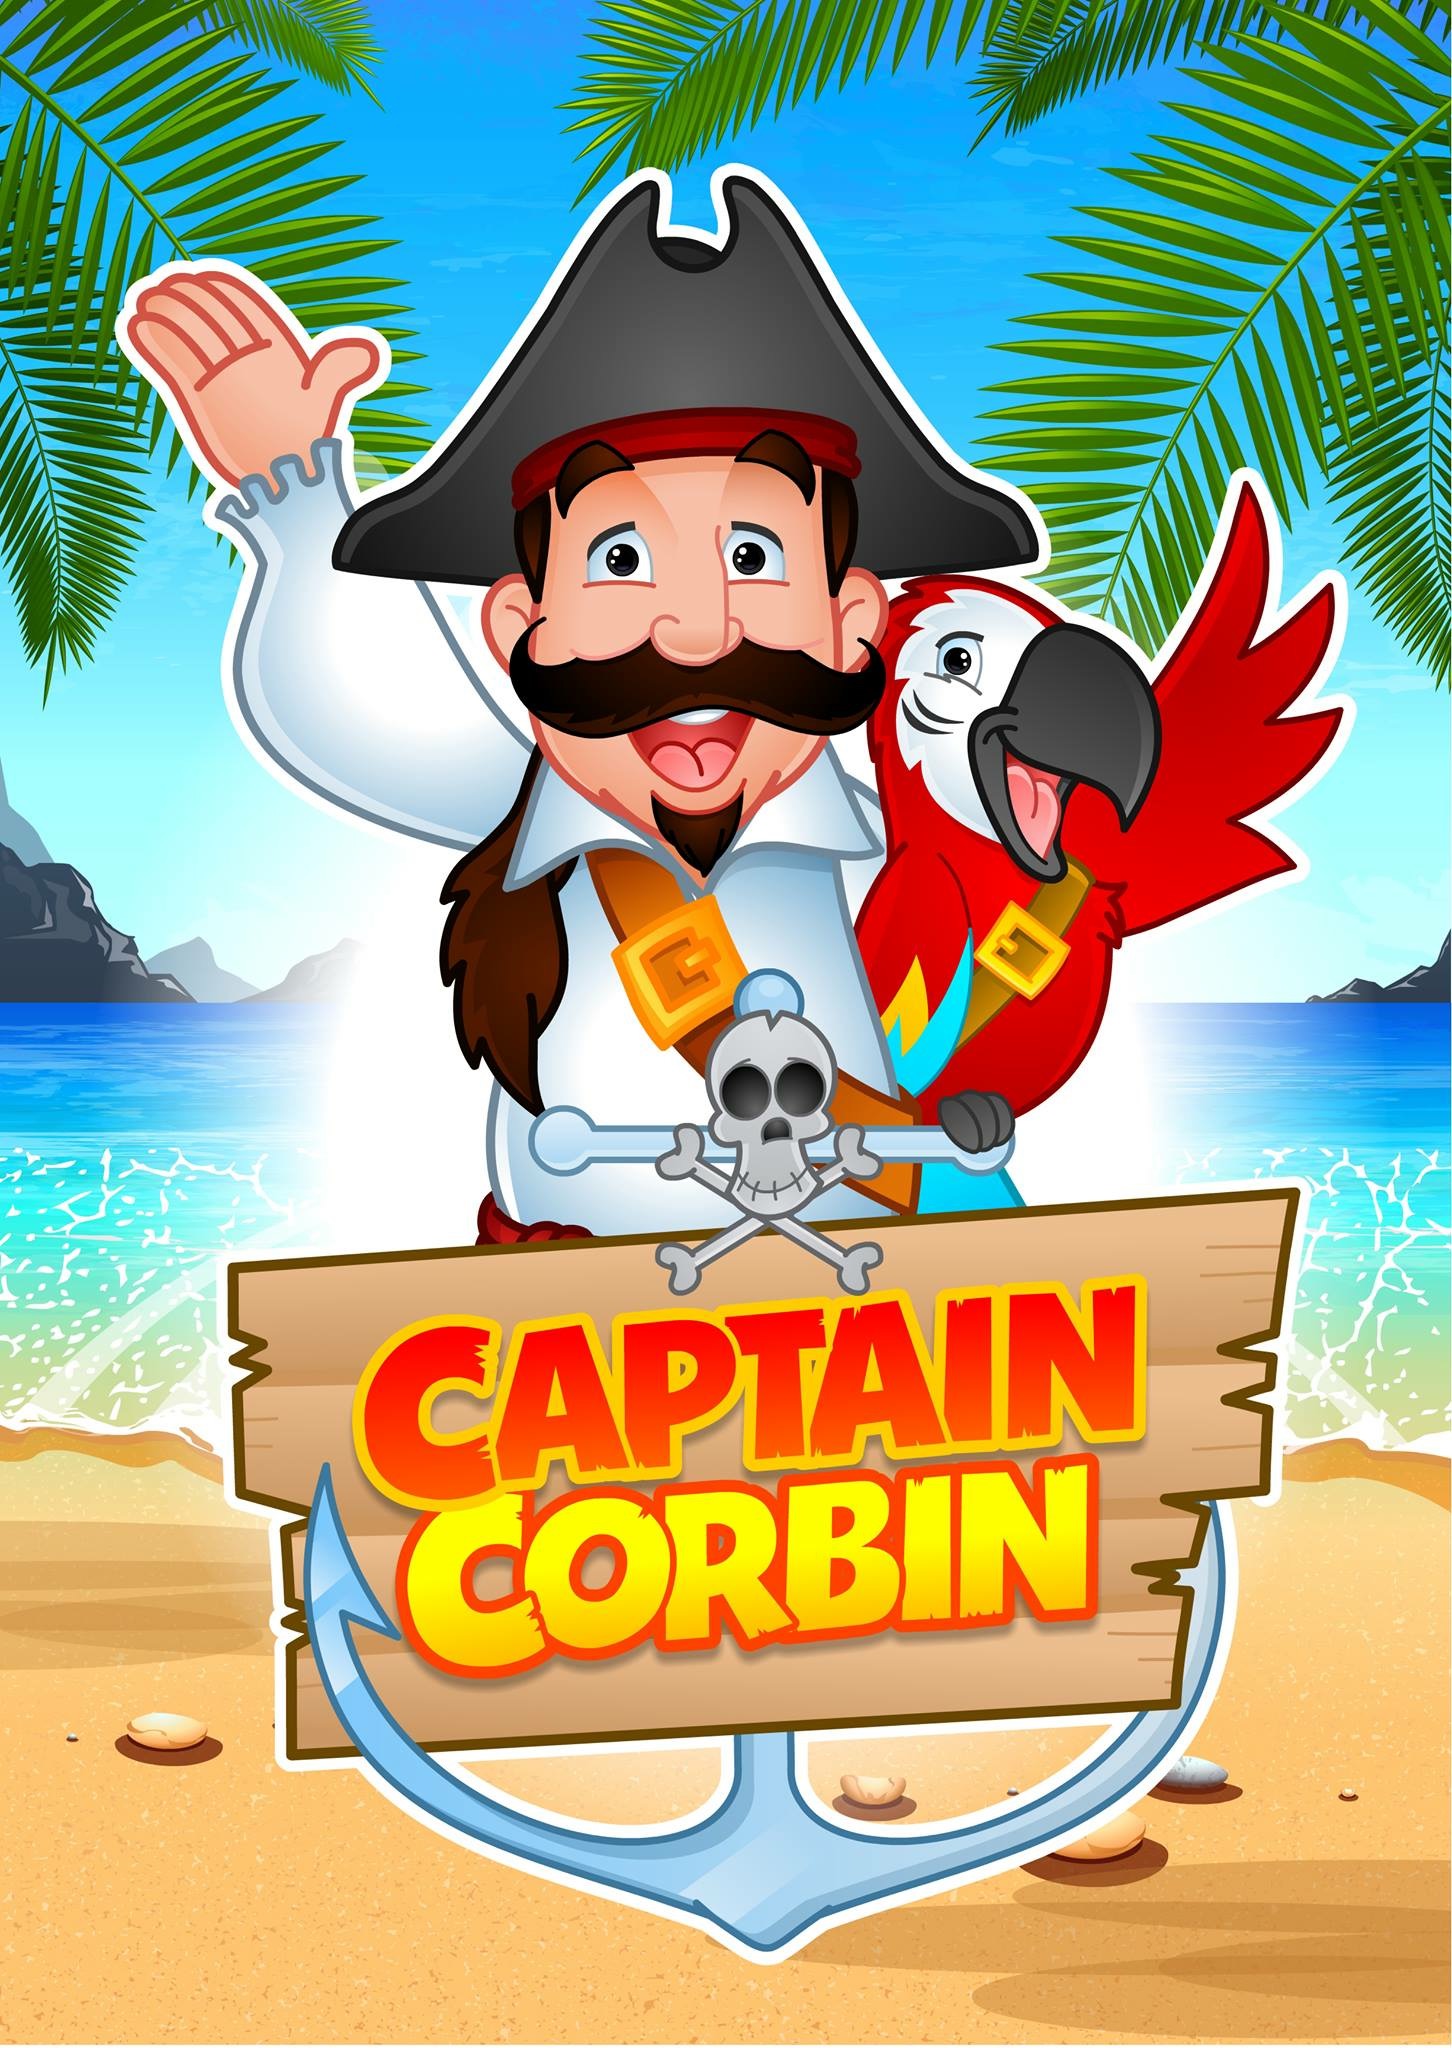 Cartoon pirate that says Captain Corbin over top